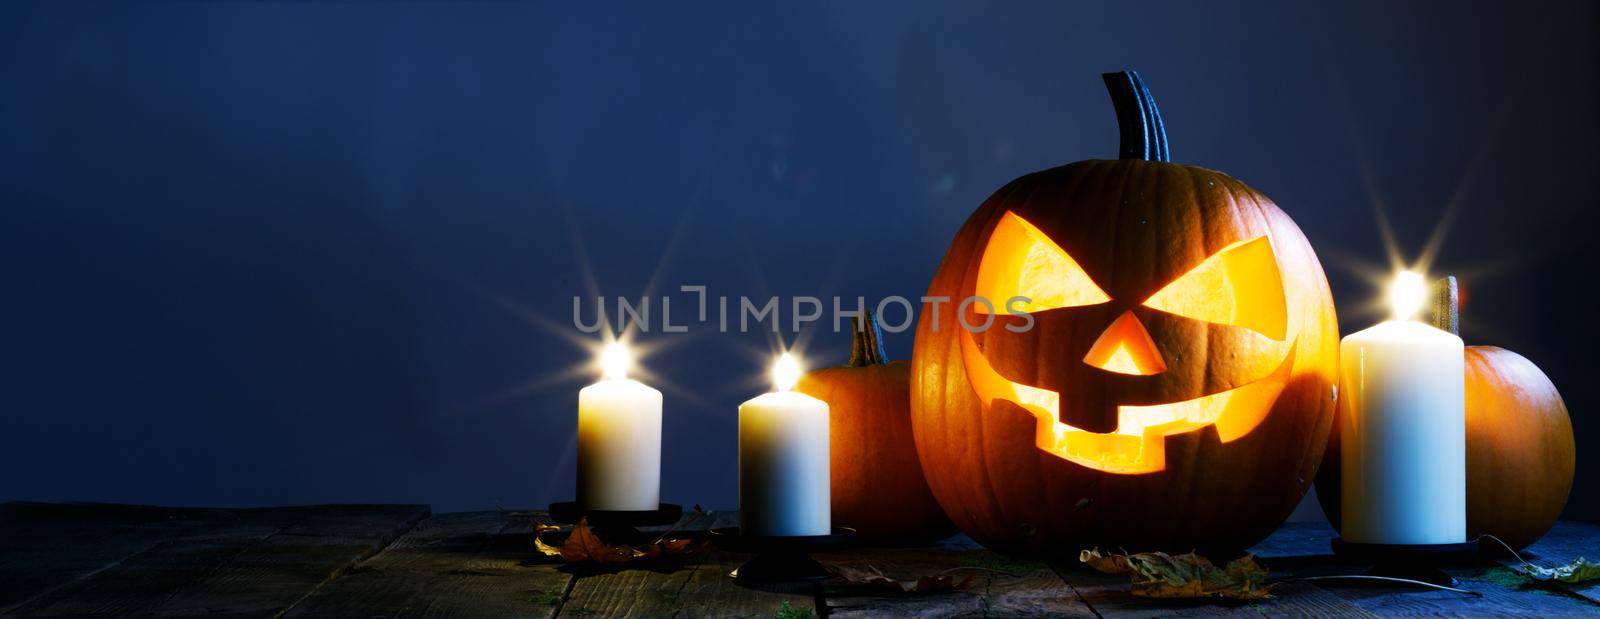 Halloween night pumpkins by Yellowj